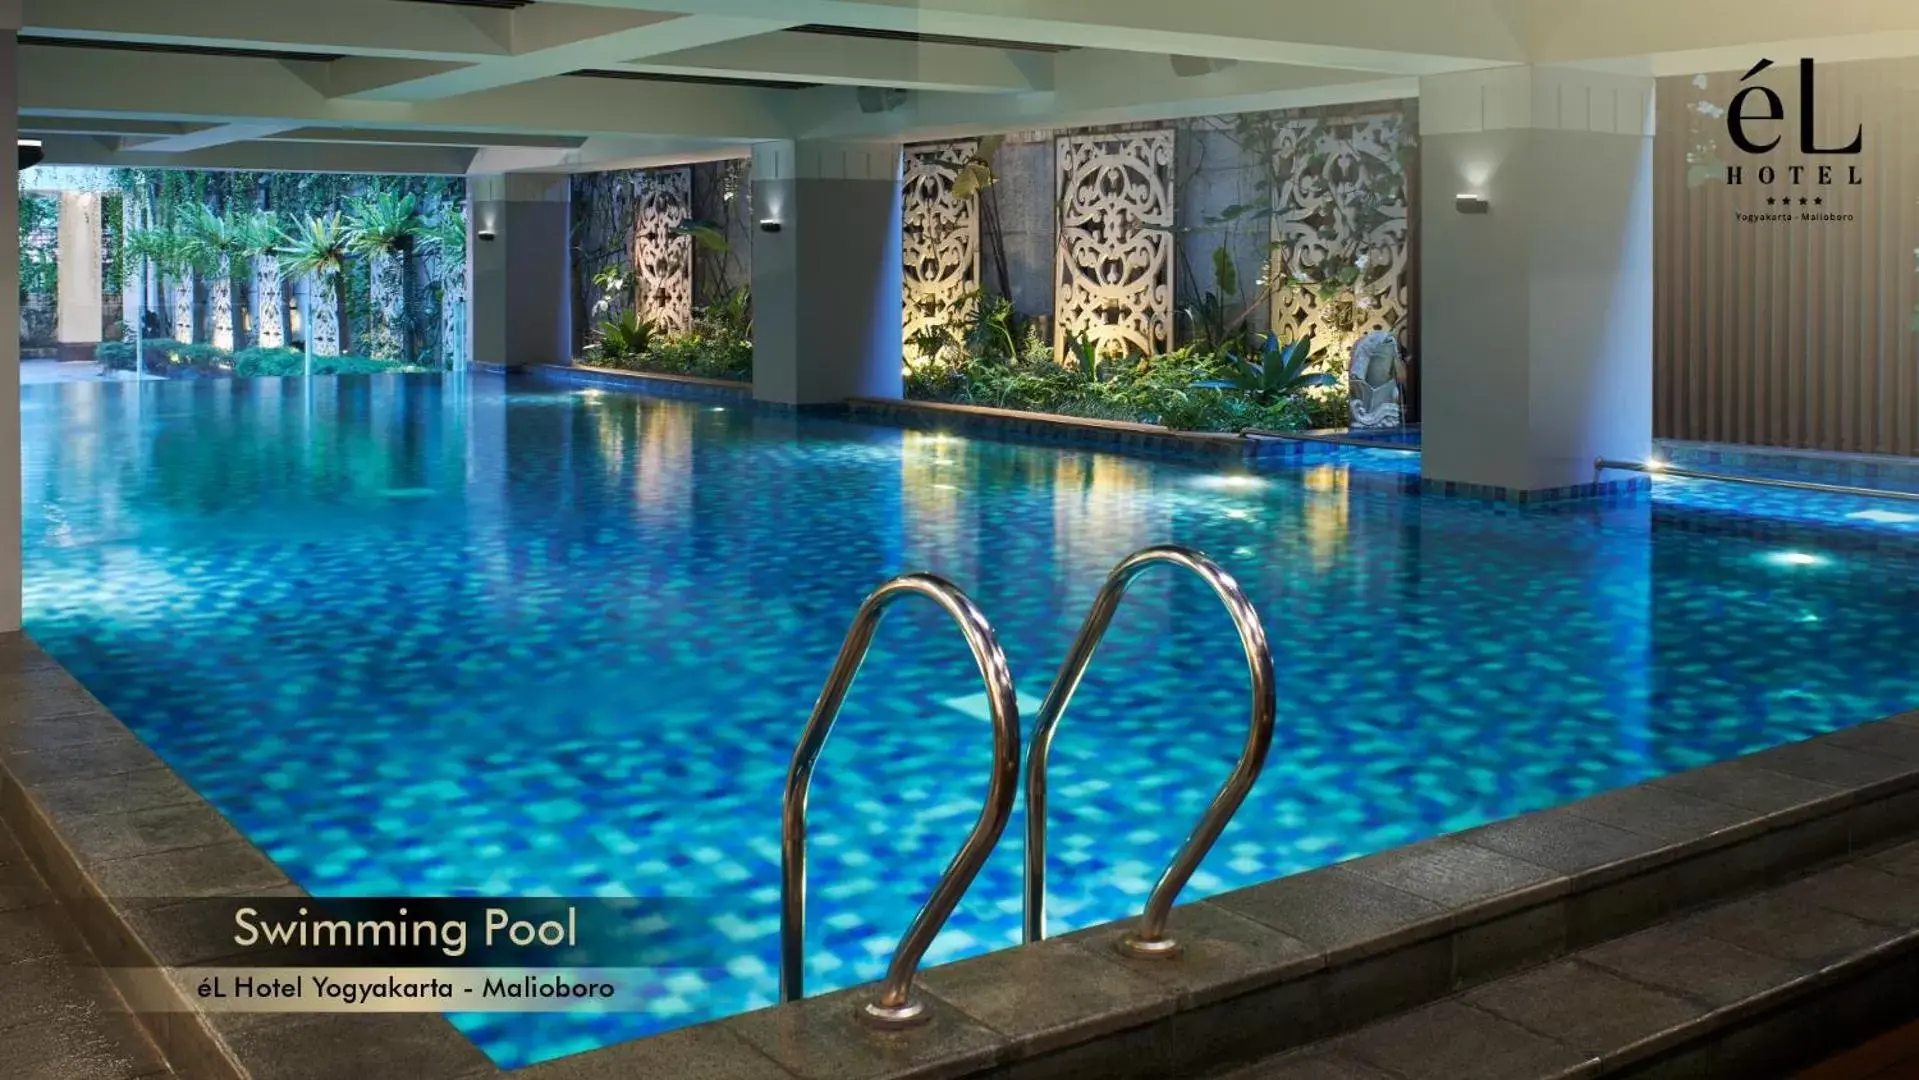 Swimming Pool in eL Hotel Yogyakarta Malioboro